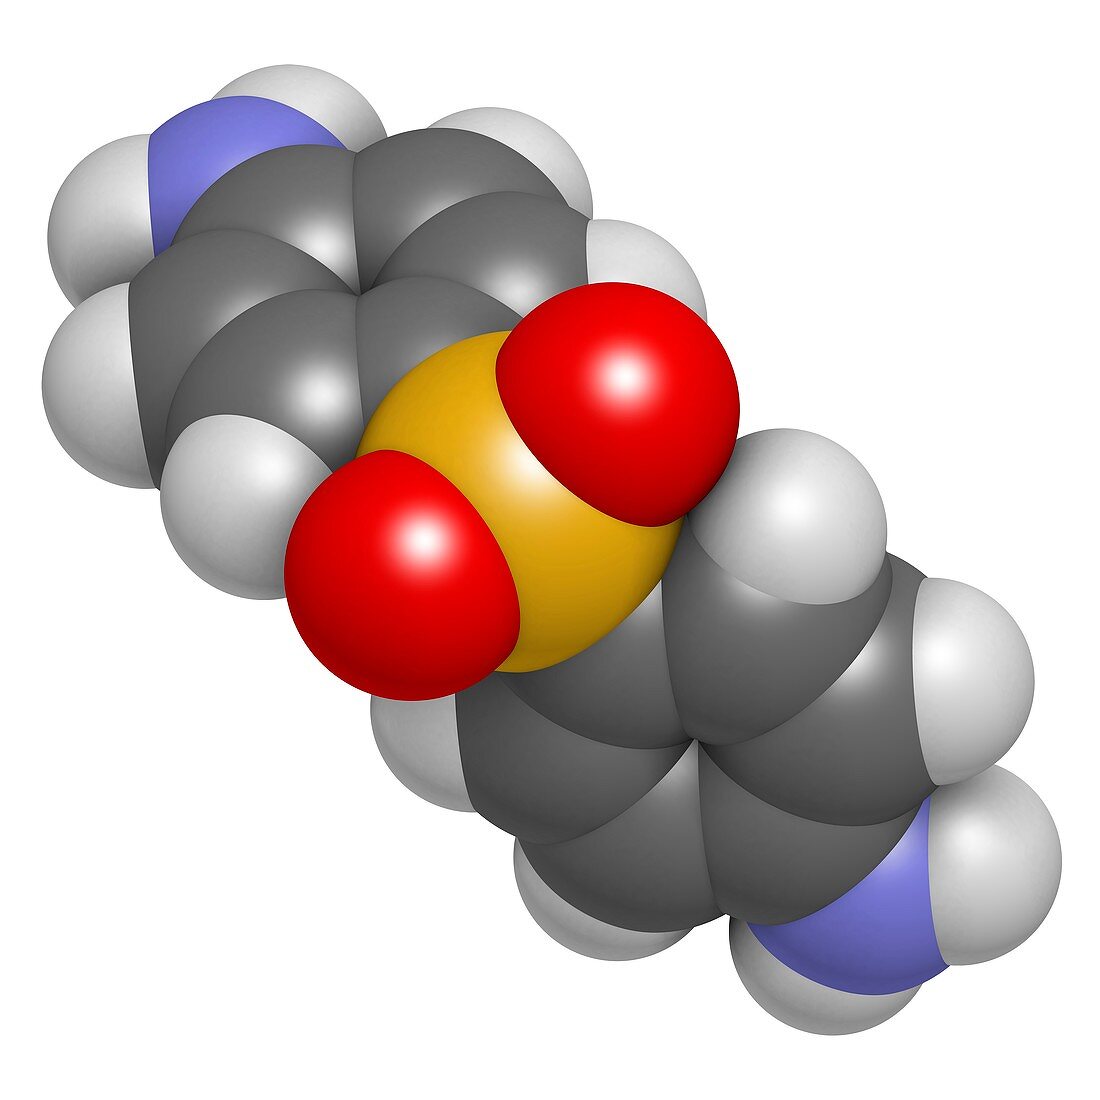 Dapsone antibacterial drug molecule